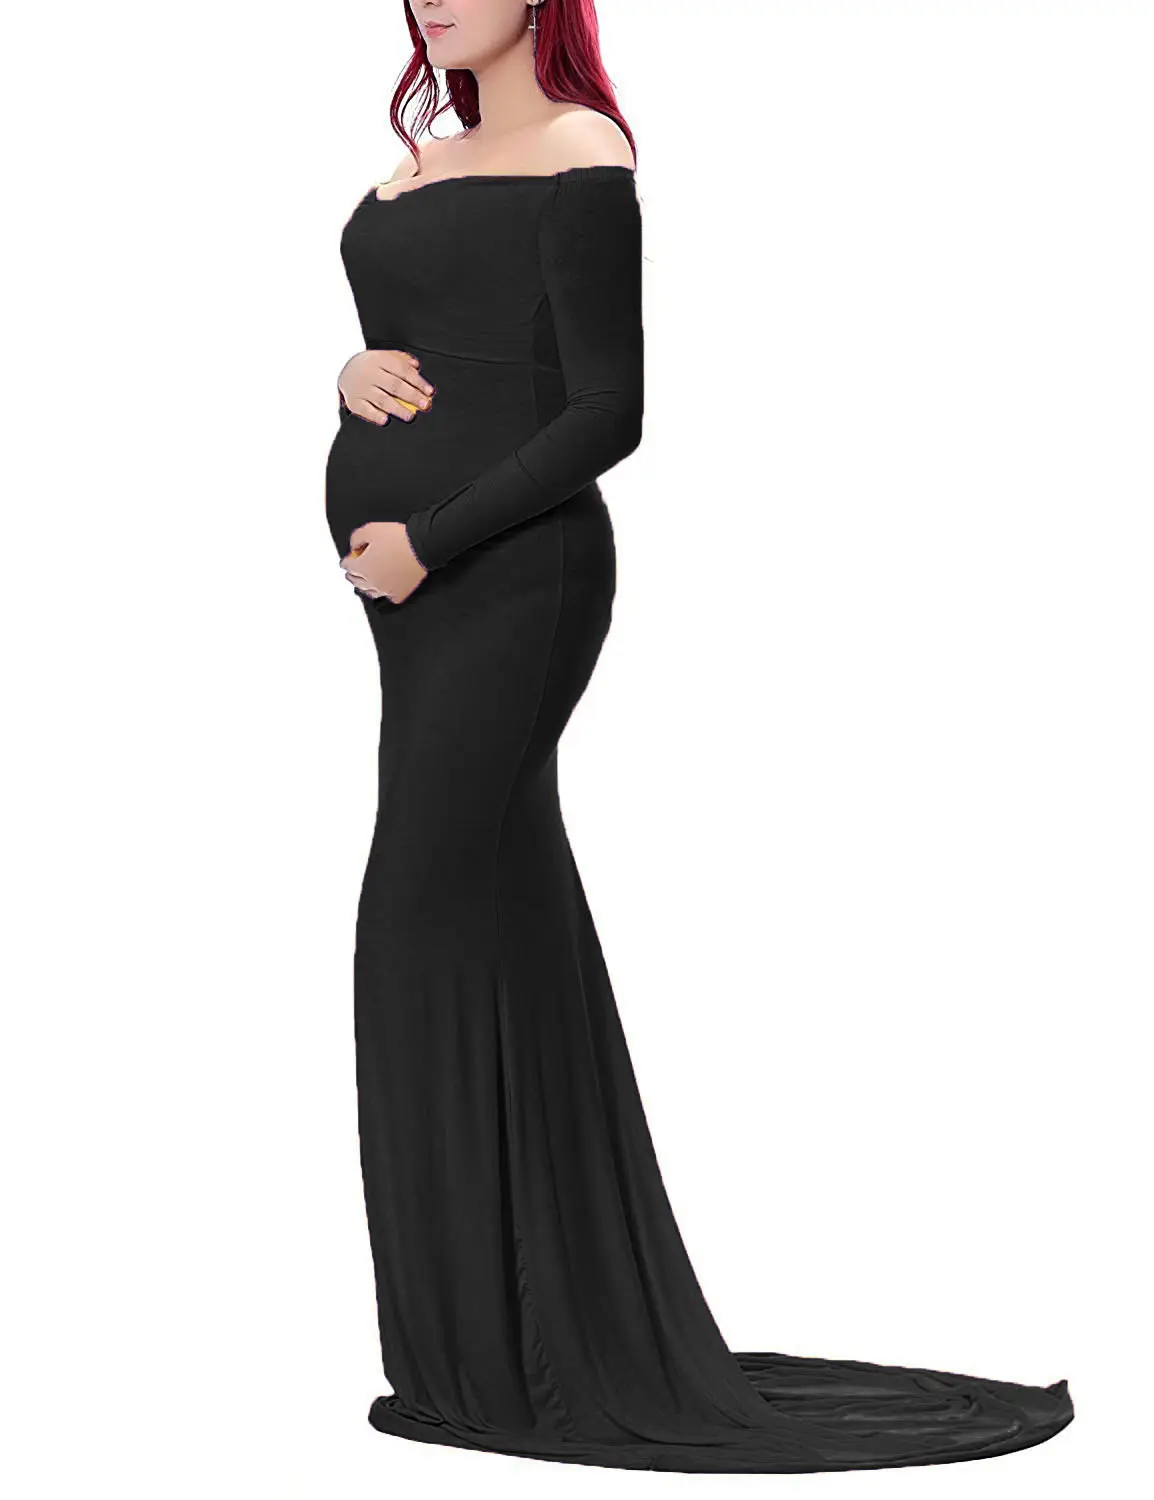 Abiti di maternità in cotone carino fotografia abiti lunghi da gravidanza abiti lunghi abiti da sera per donne incinte puntelli fotografici